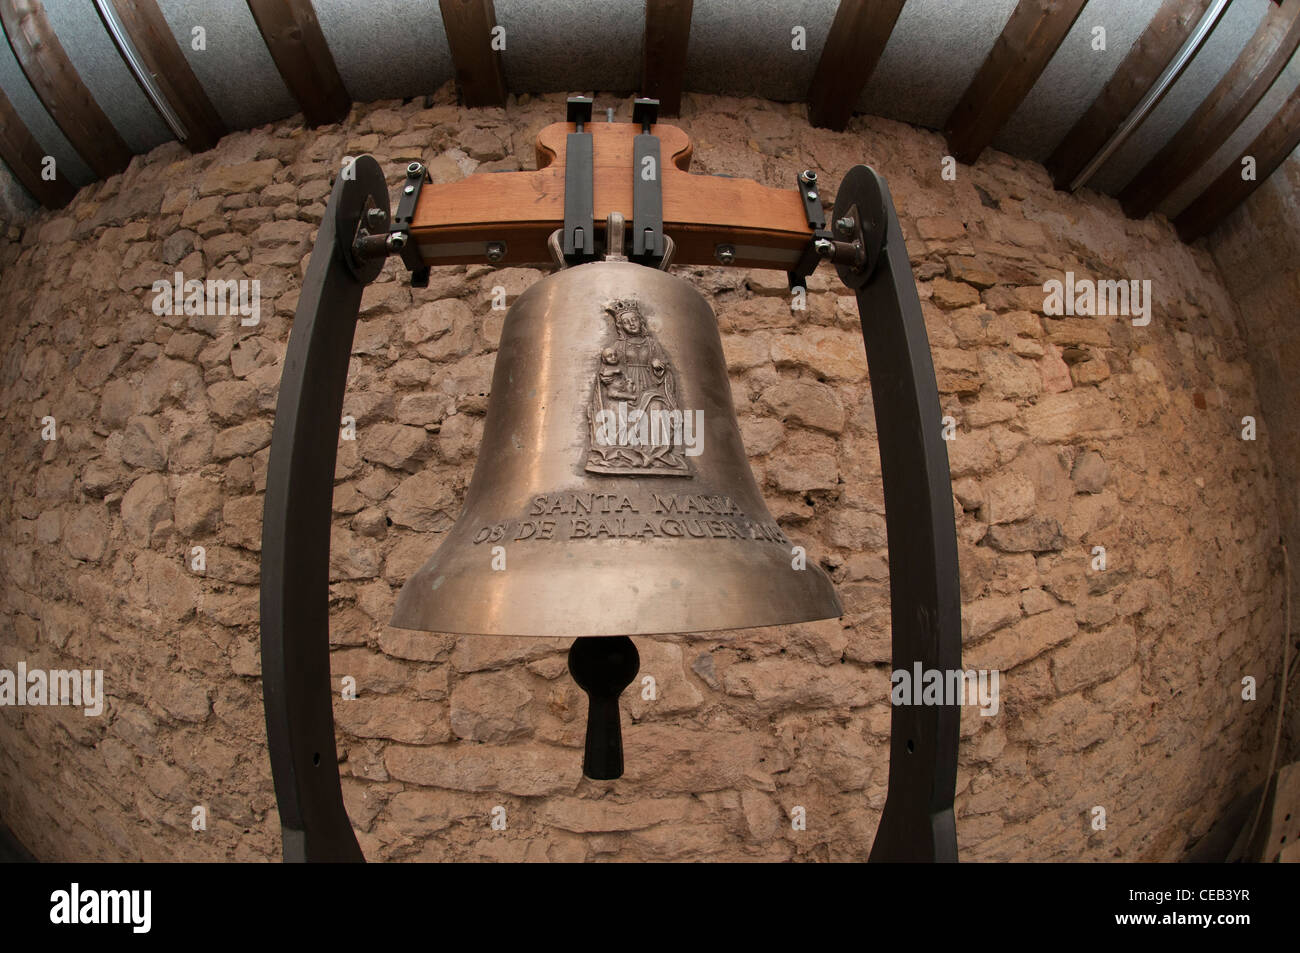 Campana di bronzo in mostra a le campane raccolta nel castello medievale di Os de Balaguer, Lleida, Spagna Foto Stock